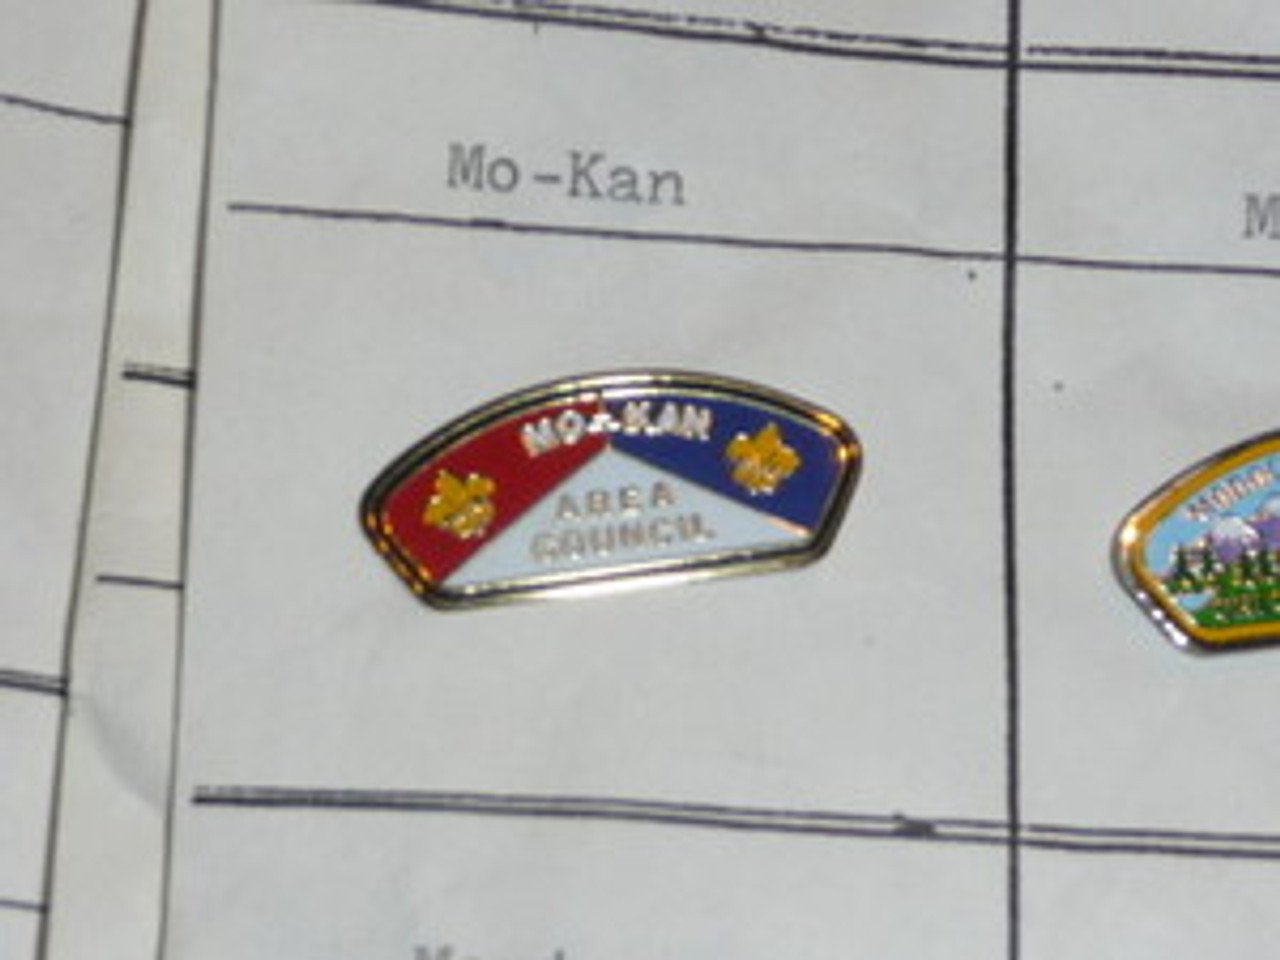 Mo-Kan Council CSP Shaped Pin - Scout